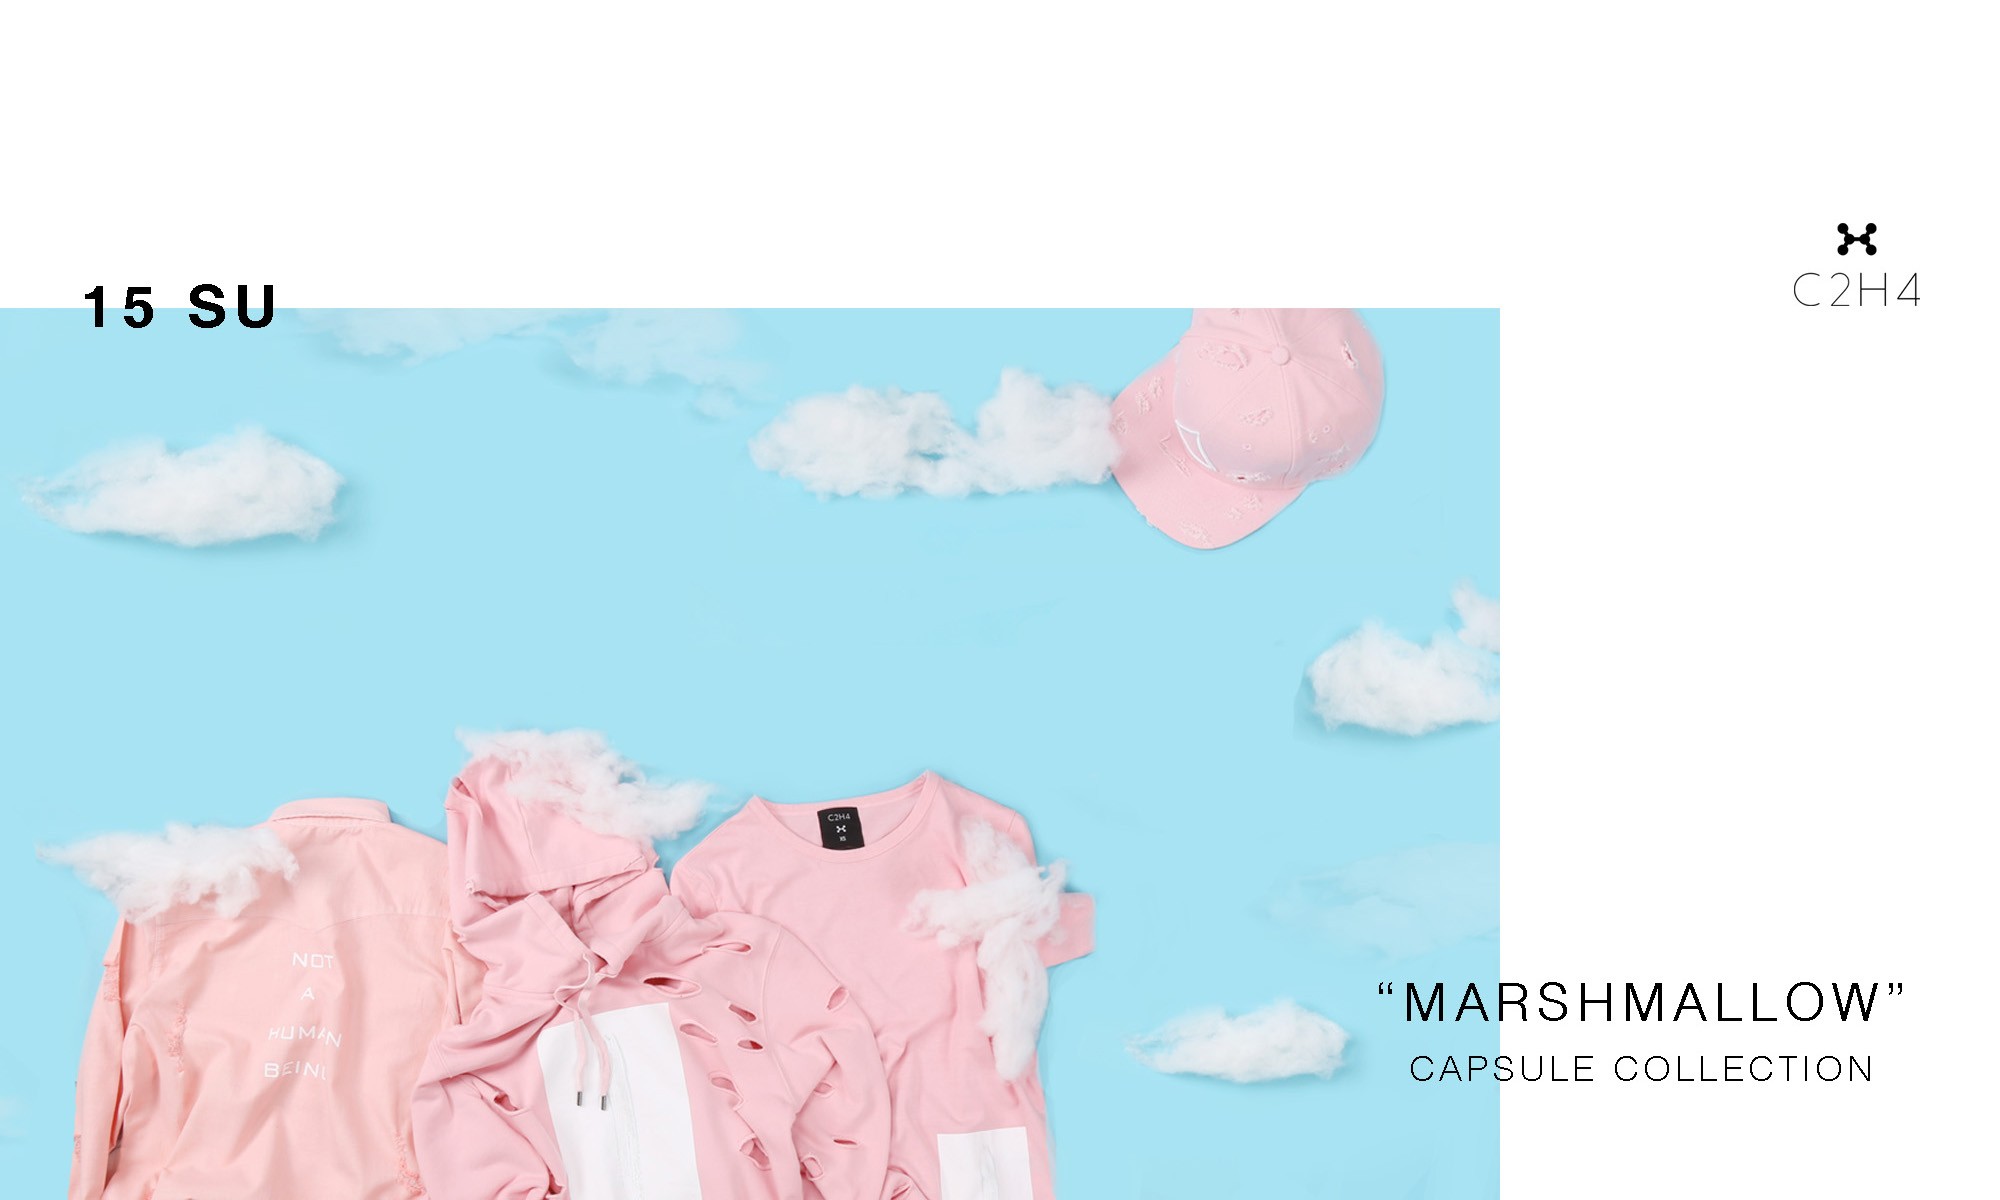 C2H4 LA 2015 夏季 “MARSHMALLOW” 粉色限定系列释出